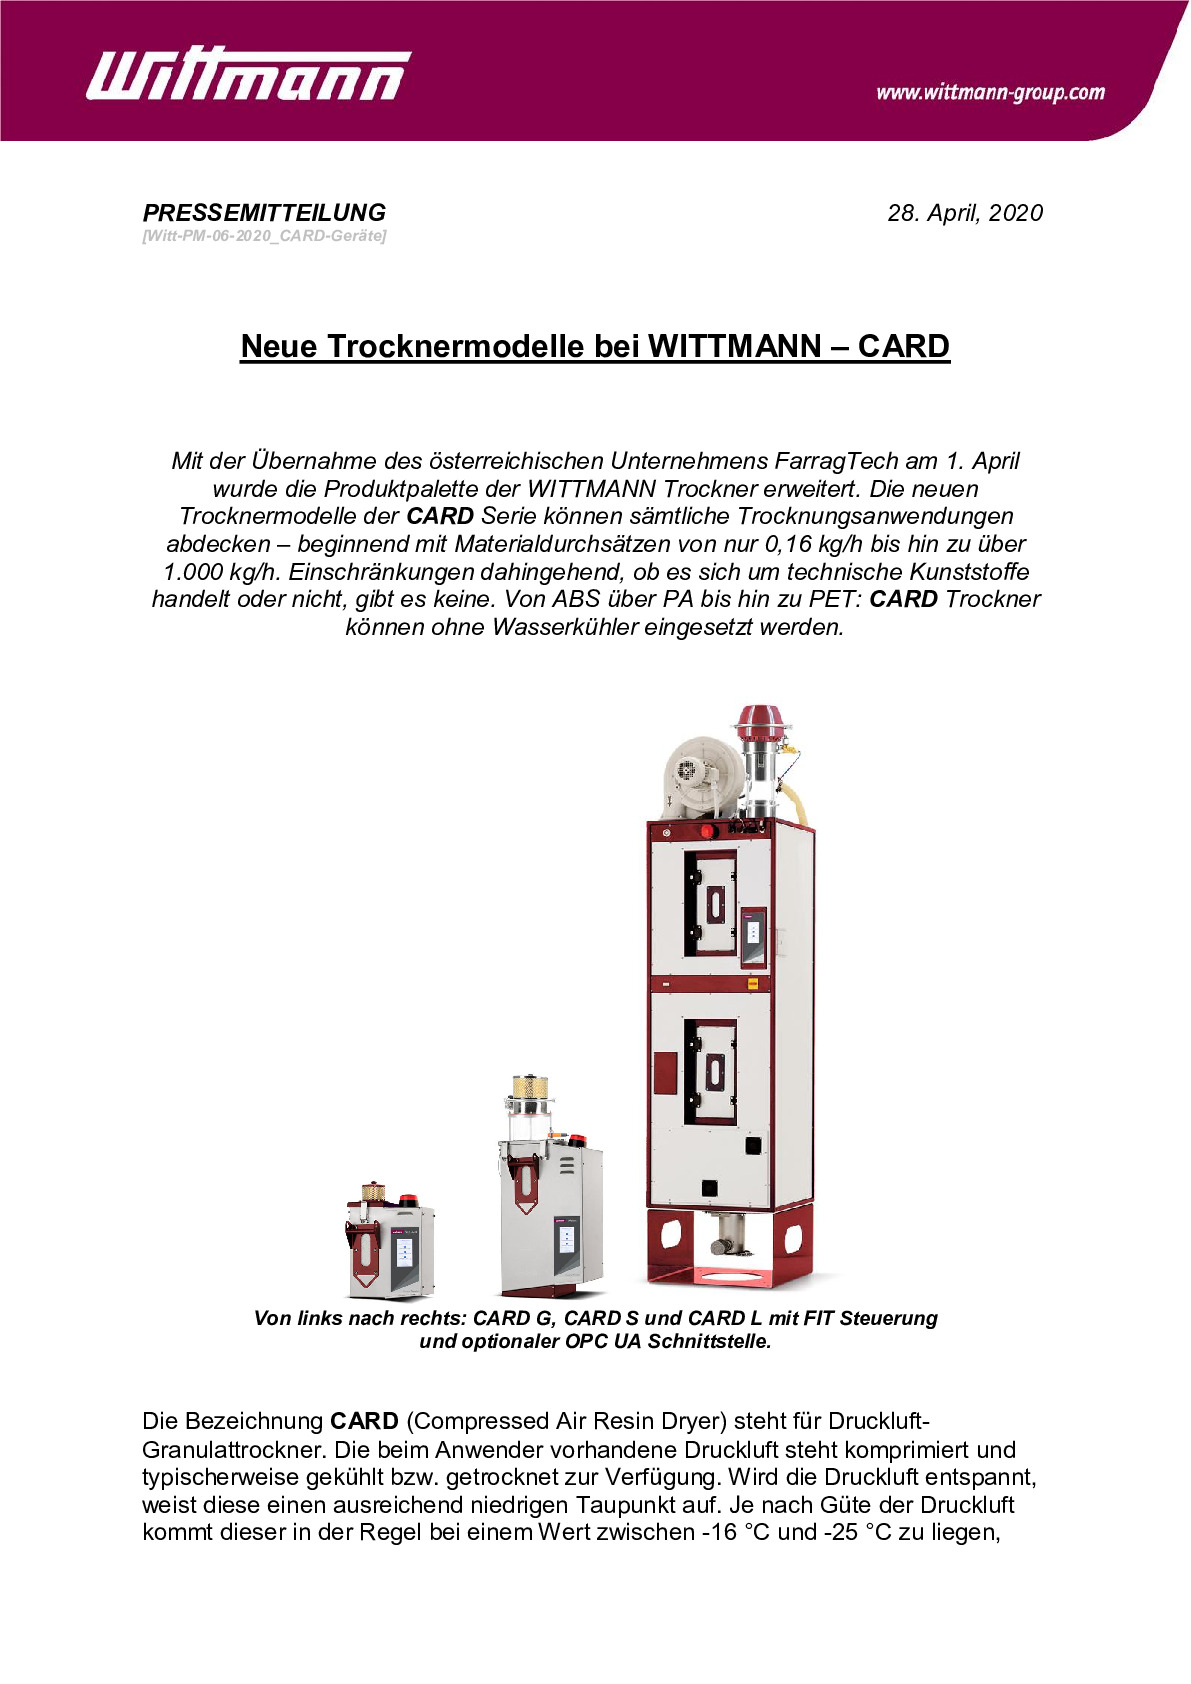 witt-pm-06-2020_card-geraete